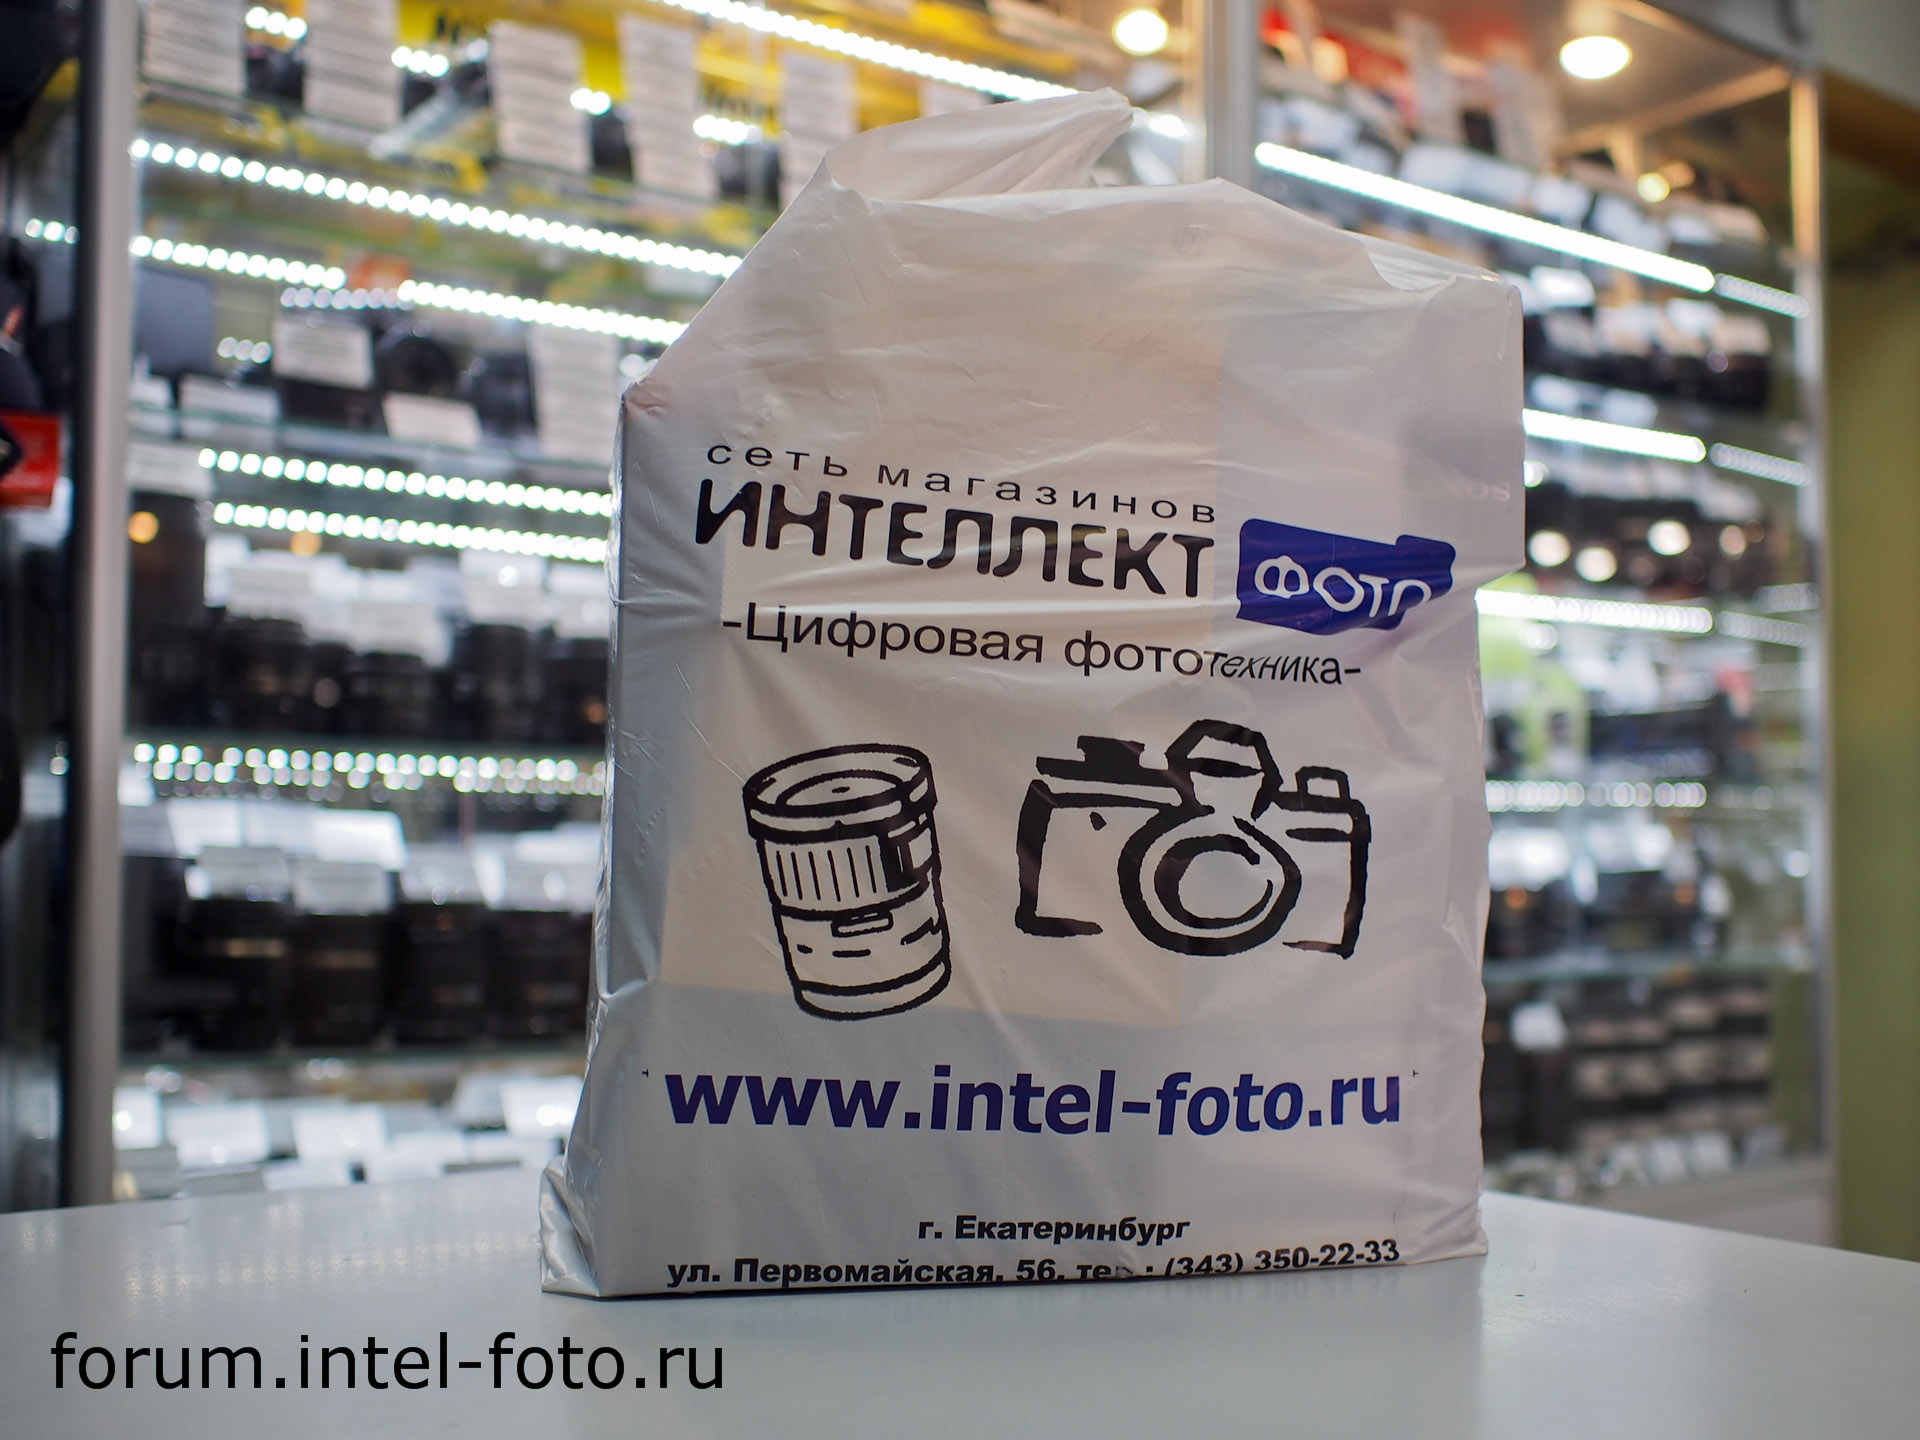 http://www.intel-foto.ru/content/publication/forum-tst/2014/2014-05/sony-a7/preview/01.jpg